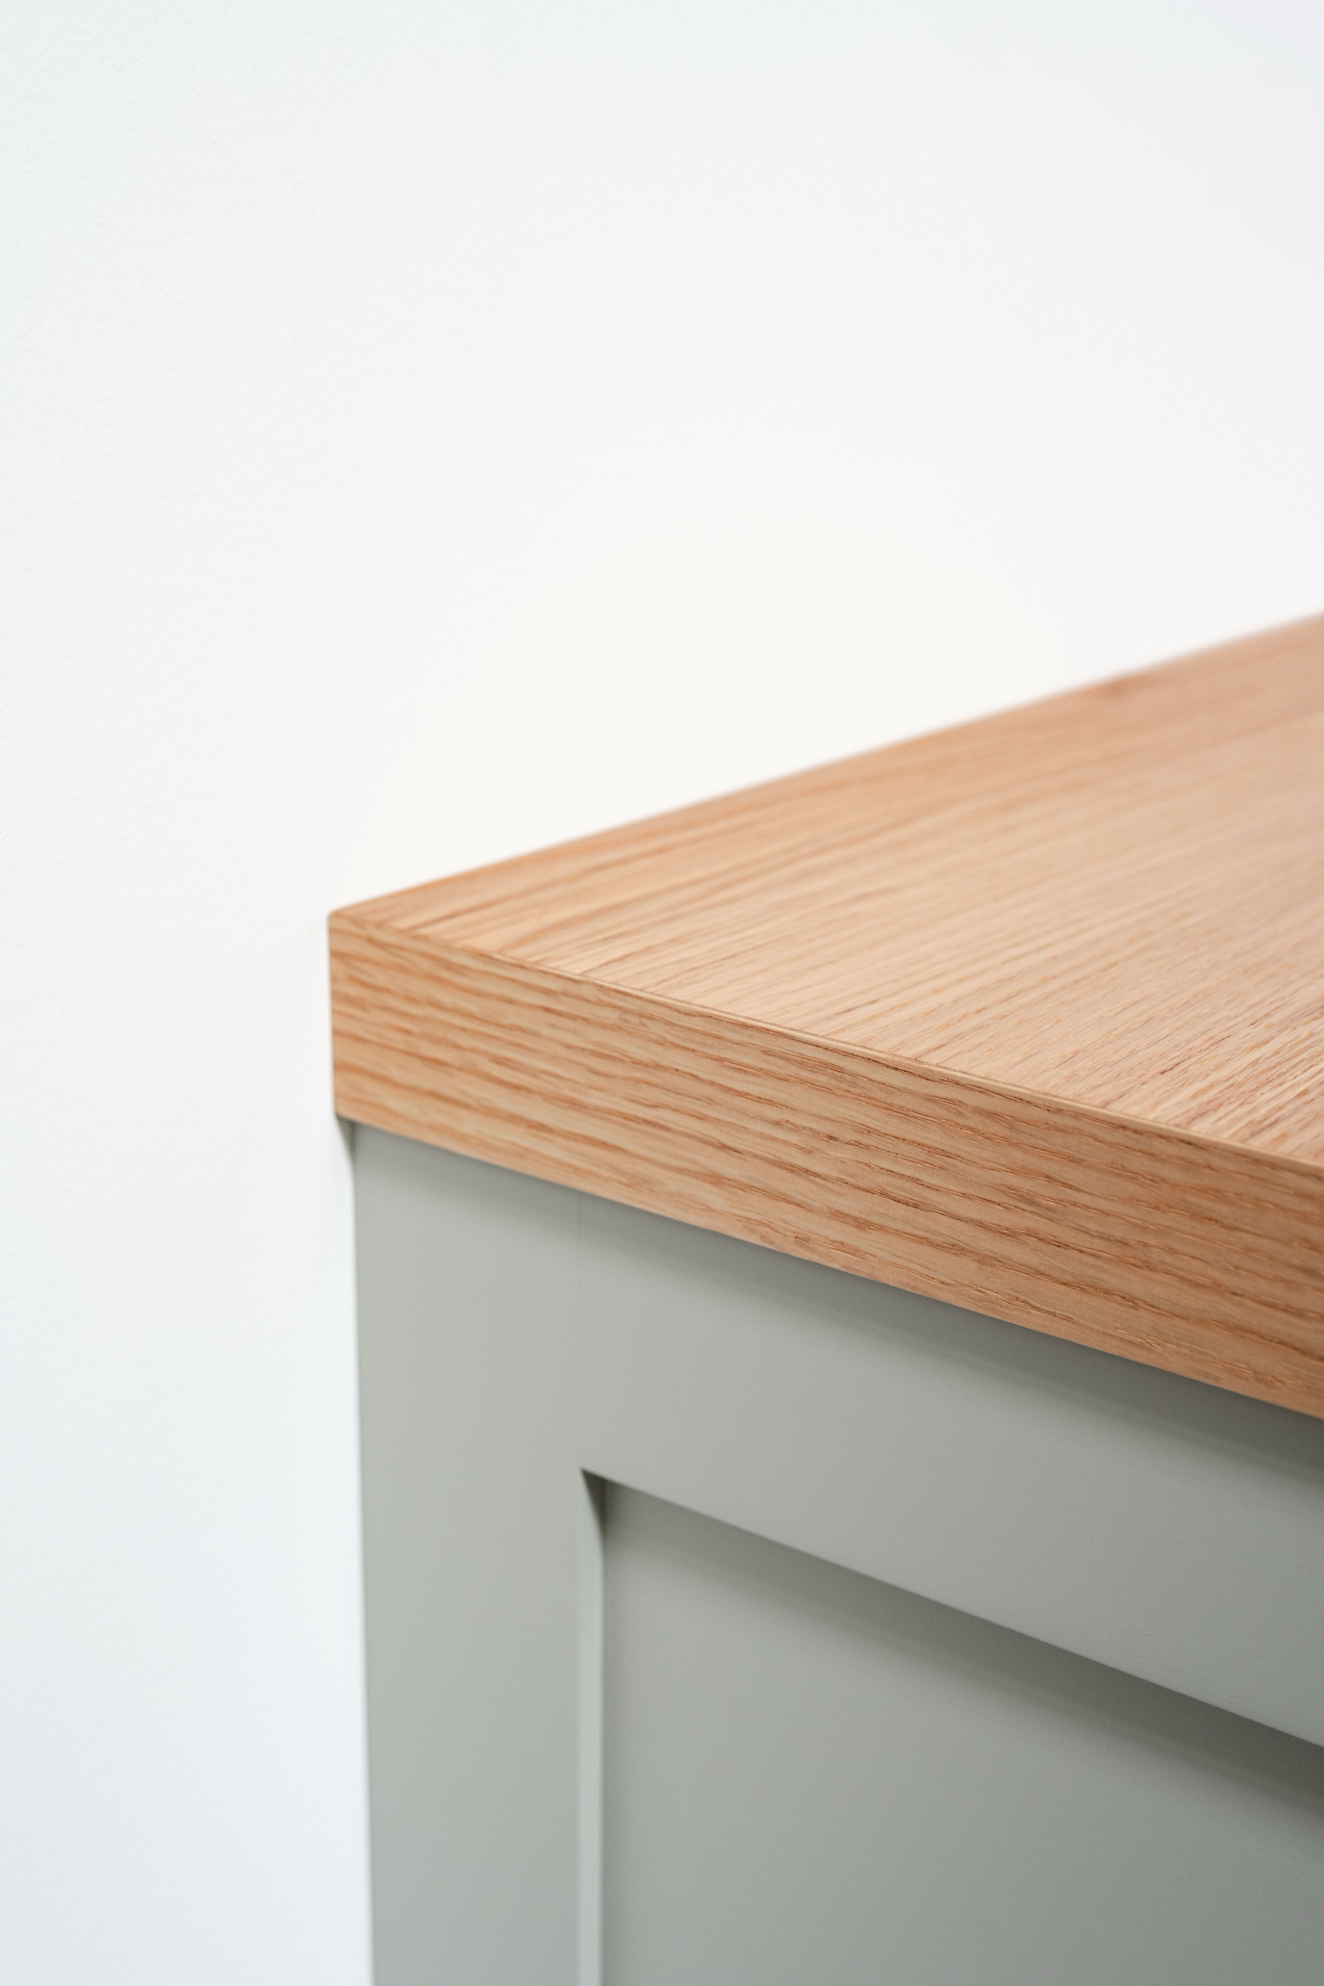 Red Oak 2-4" thick Cabinet Top / Slab Shelf